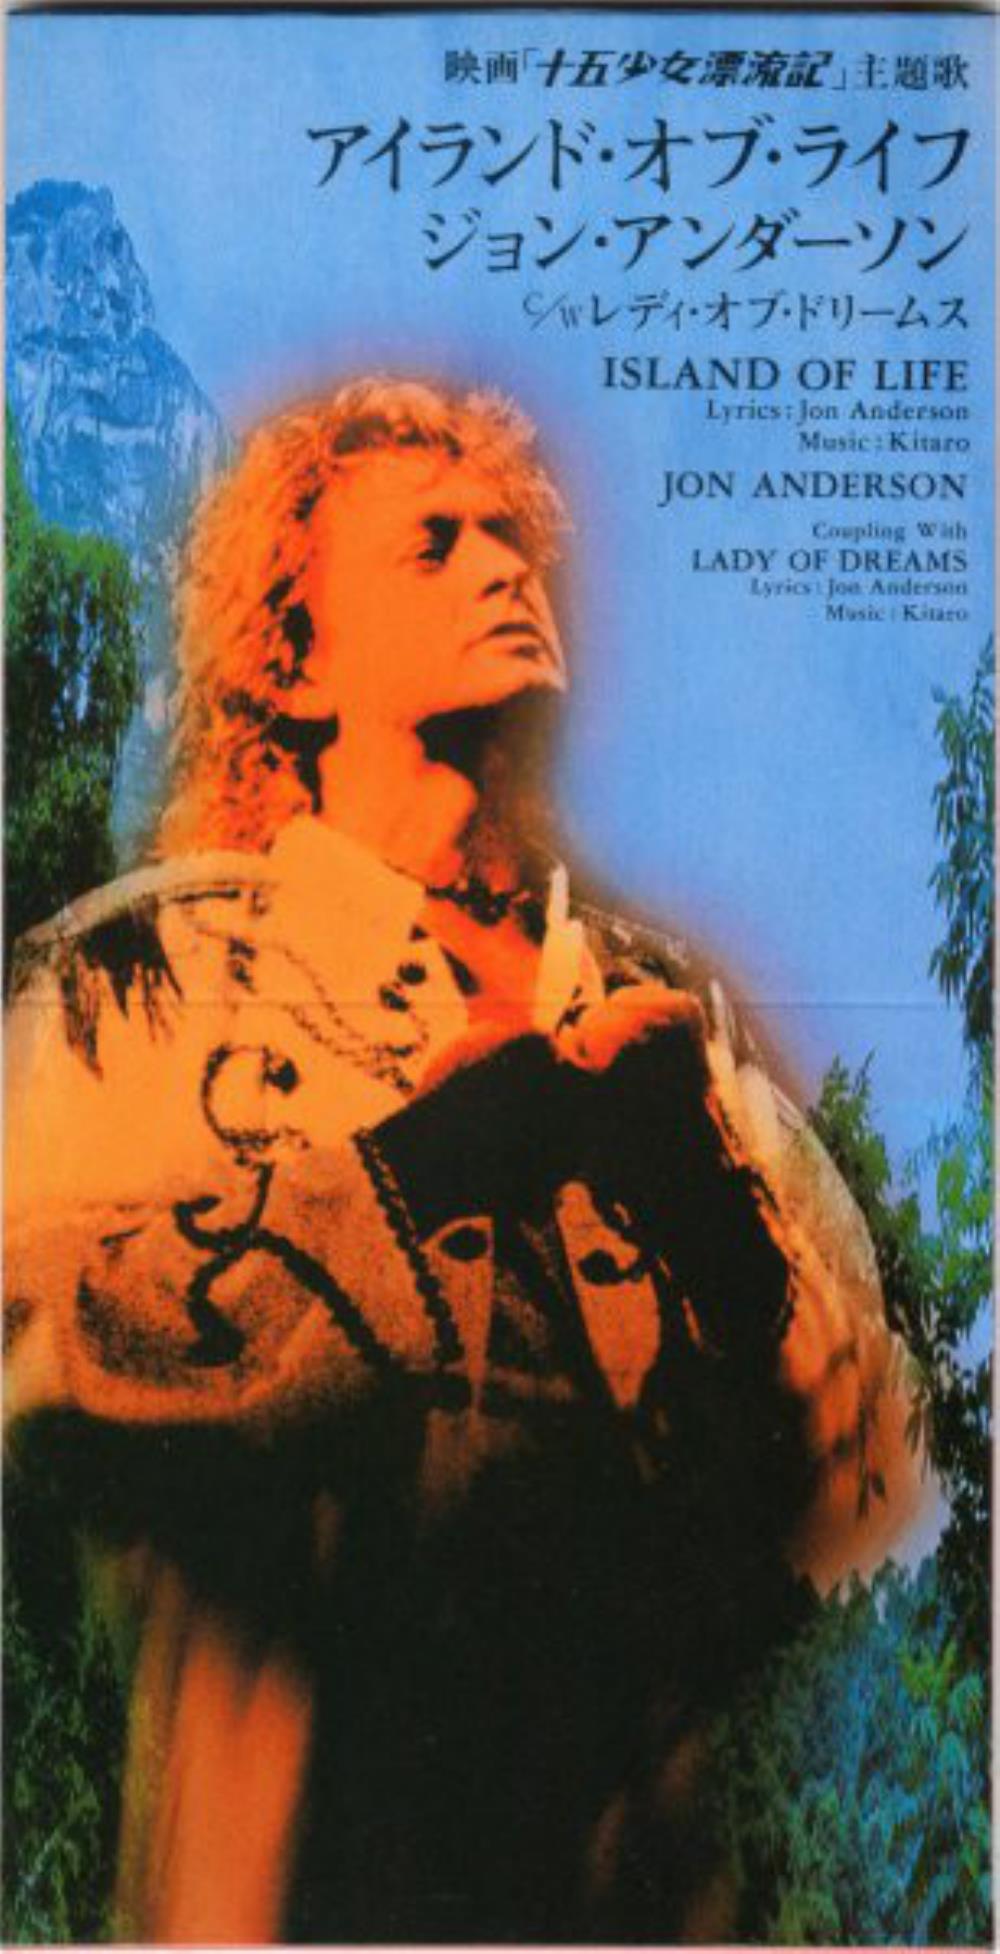 Jon Anderson - Jon Anderson / Kitaro - Island of Life CD (album) cover